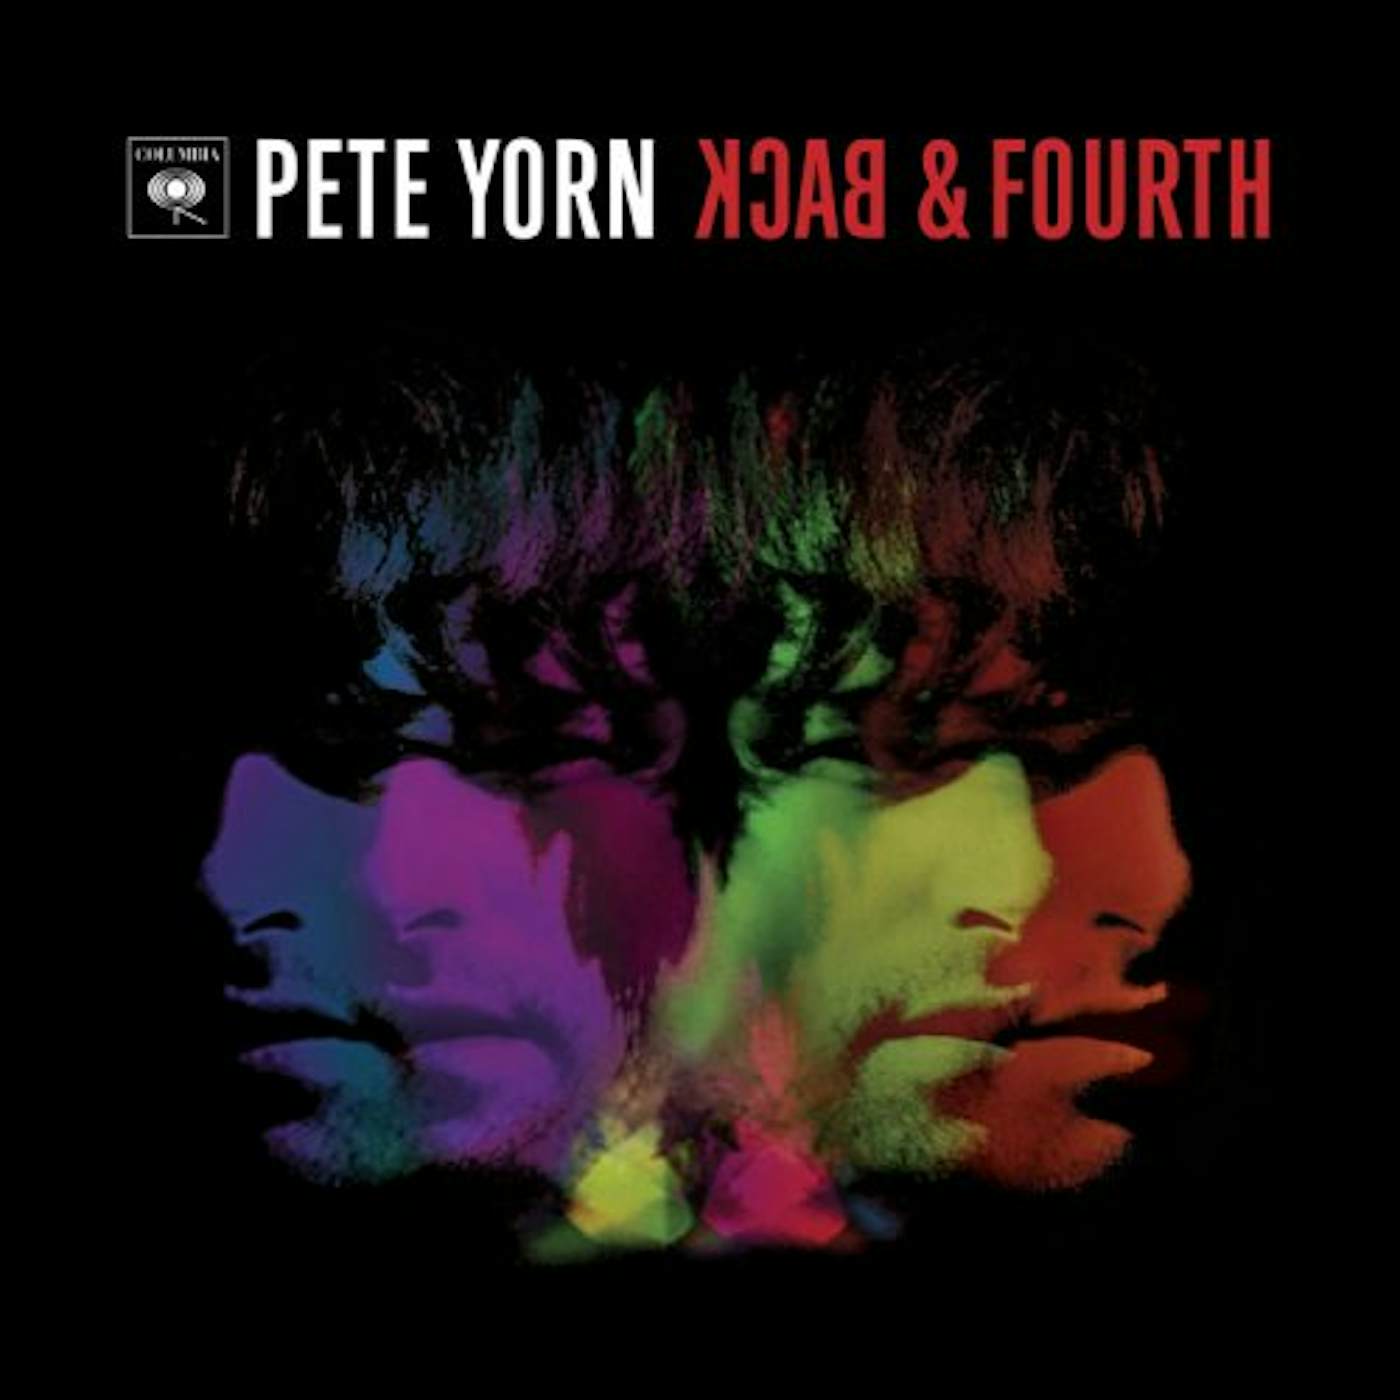 Pete Yorn BACK & FOURTH CD